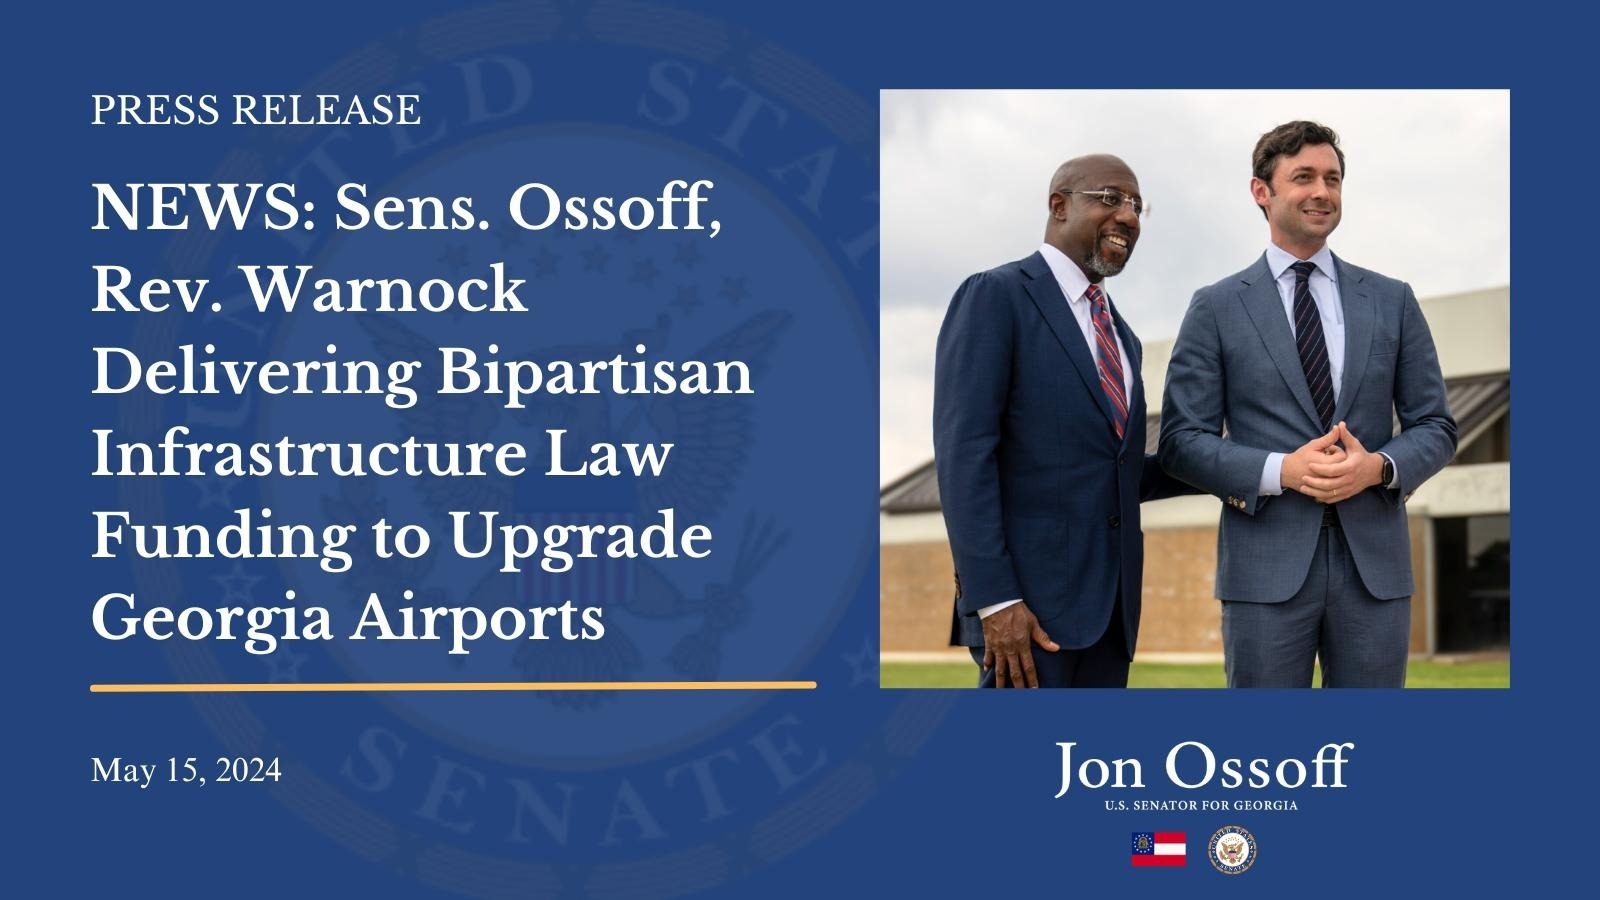 NEWS: Sens. Ossoff, Rev. Warnock Delivering Bipartisan Infrastructure Law Funding to Upgrade Georgia Airports – U.S. Senator for Georgia Jon Ossoff